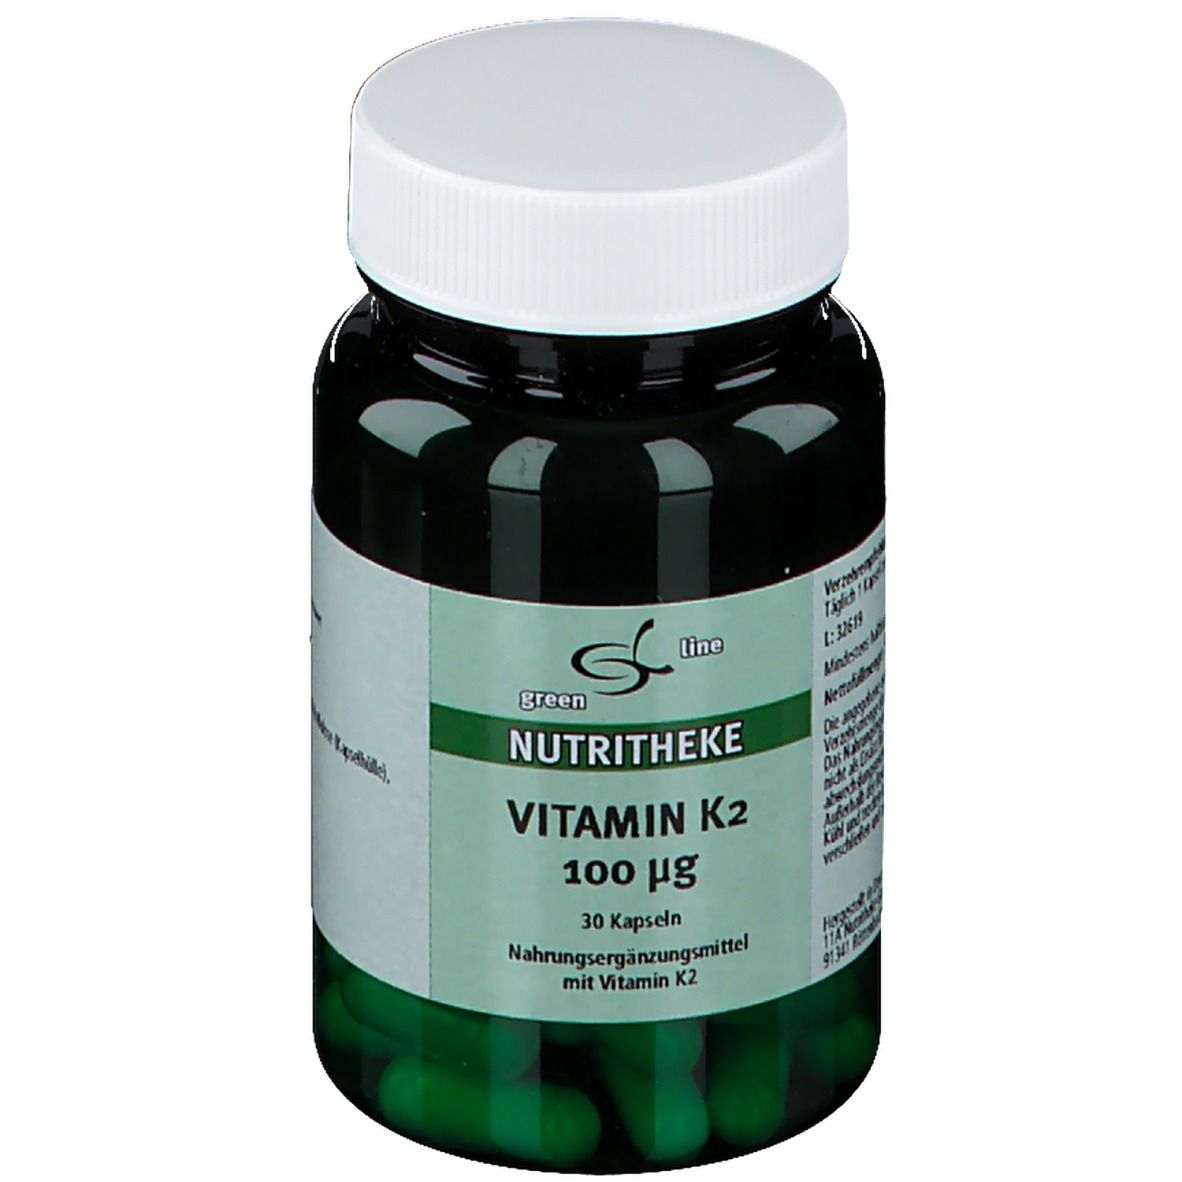 Image of Nutritheke Vitamin K2 100 µg